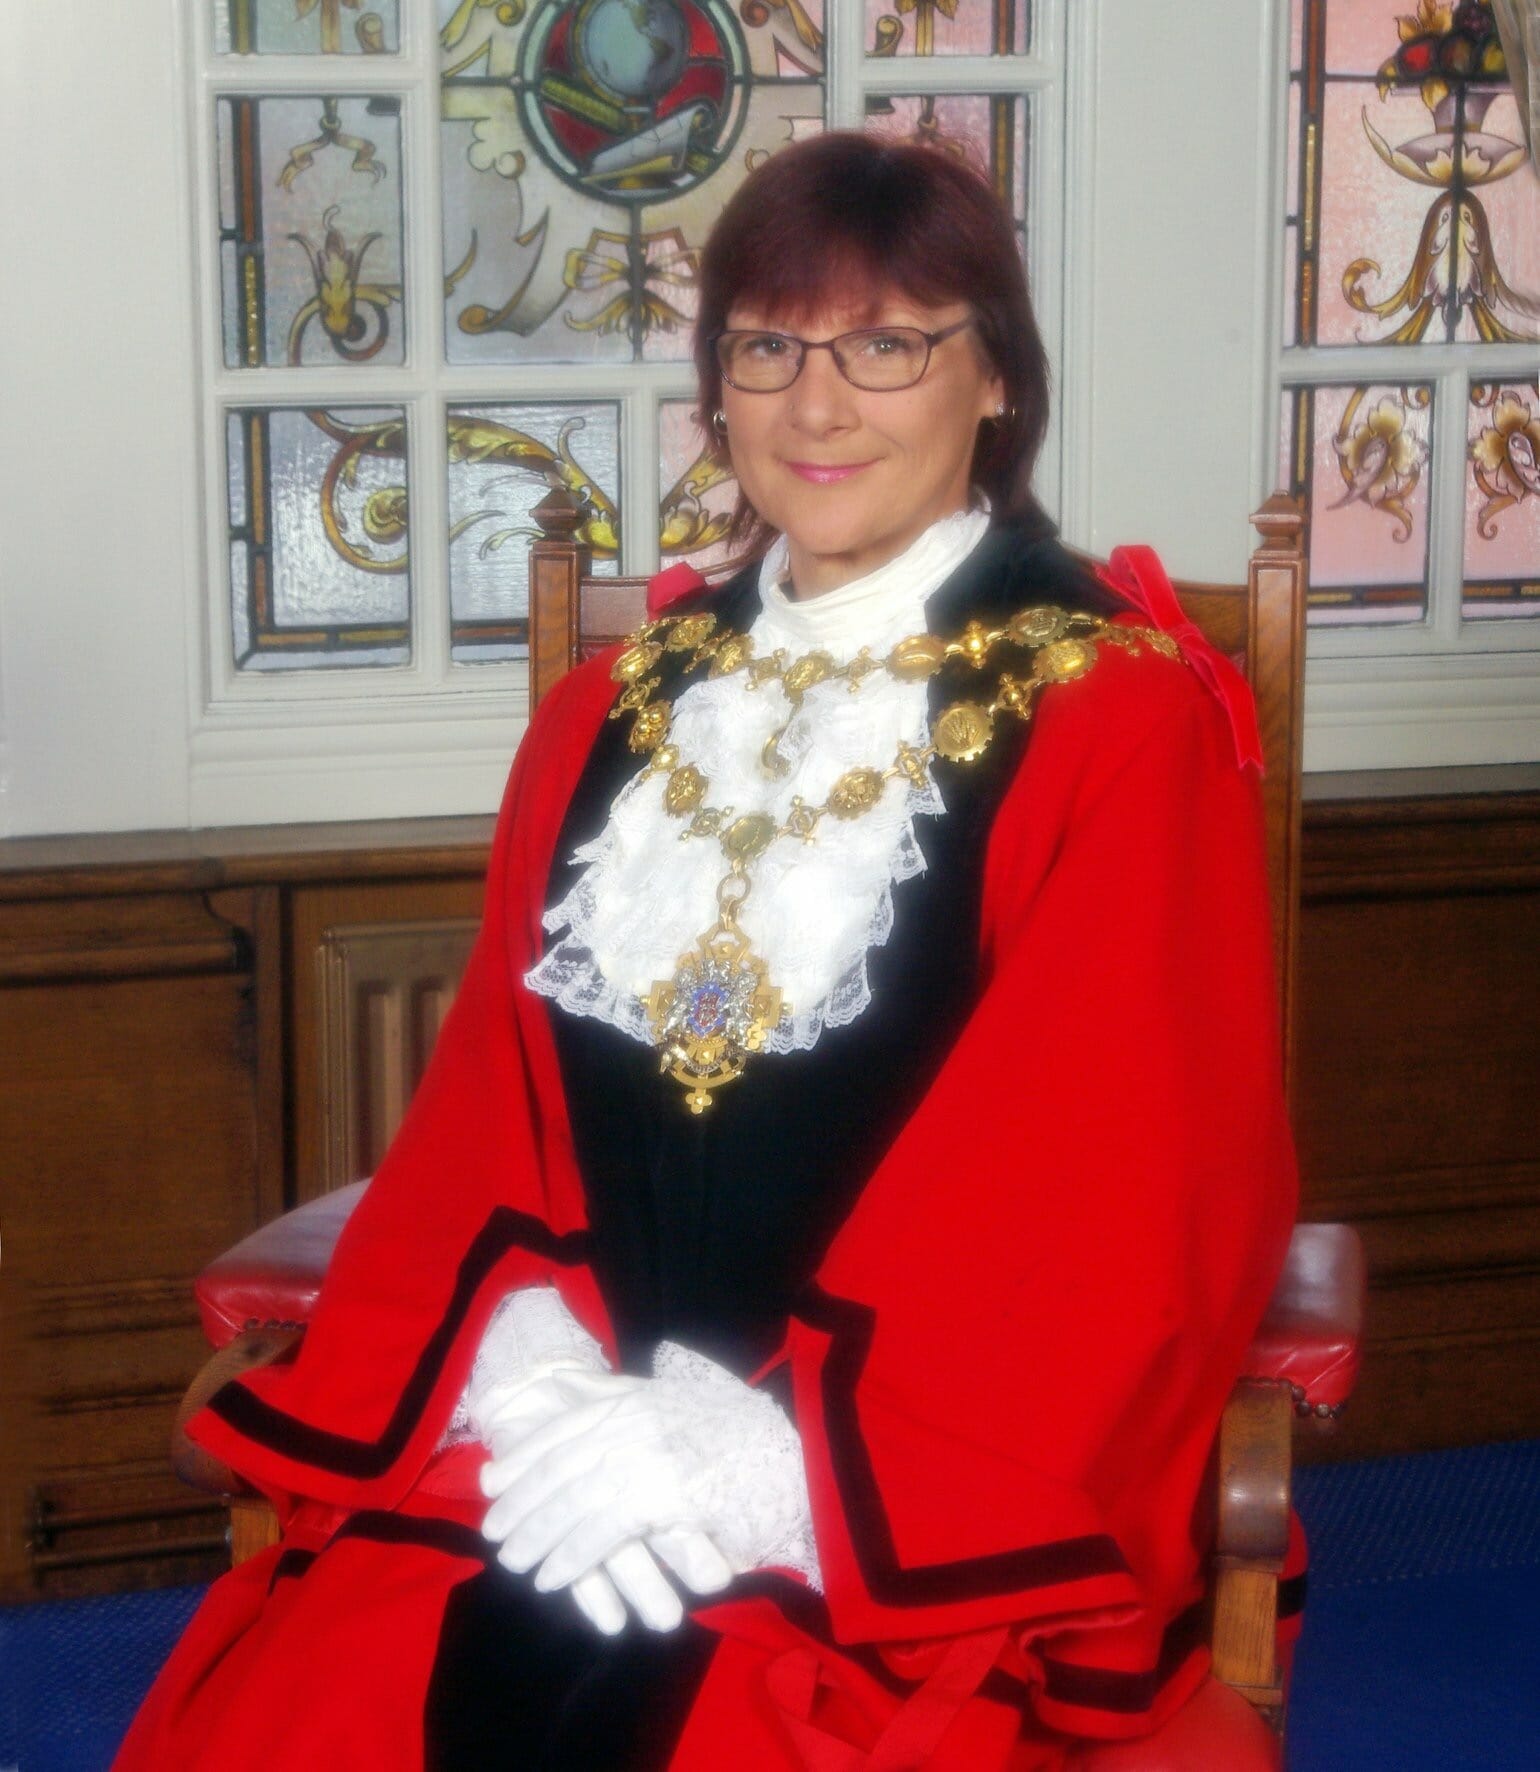 Former Mayor Sharon Michael thanks residents of Hereford